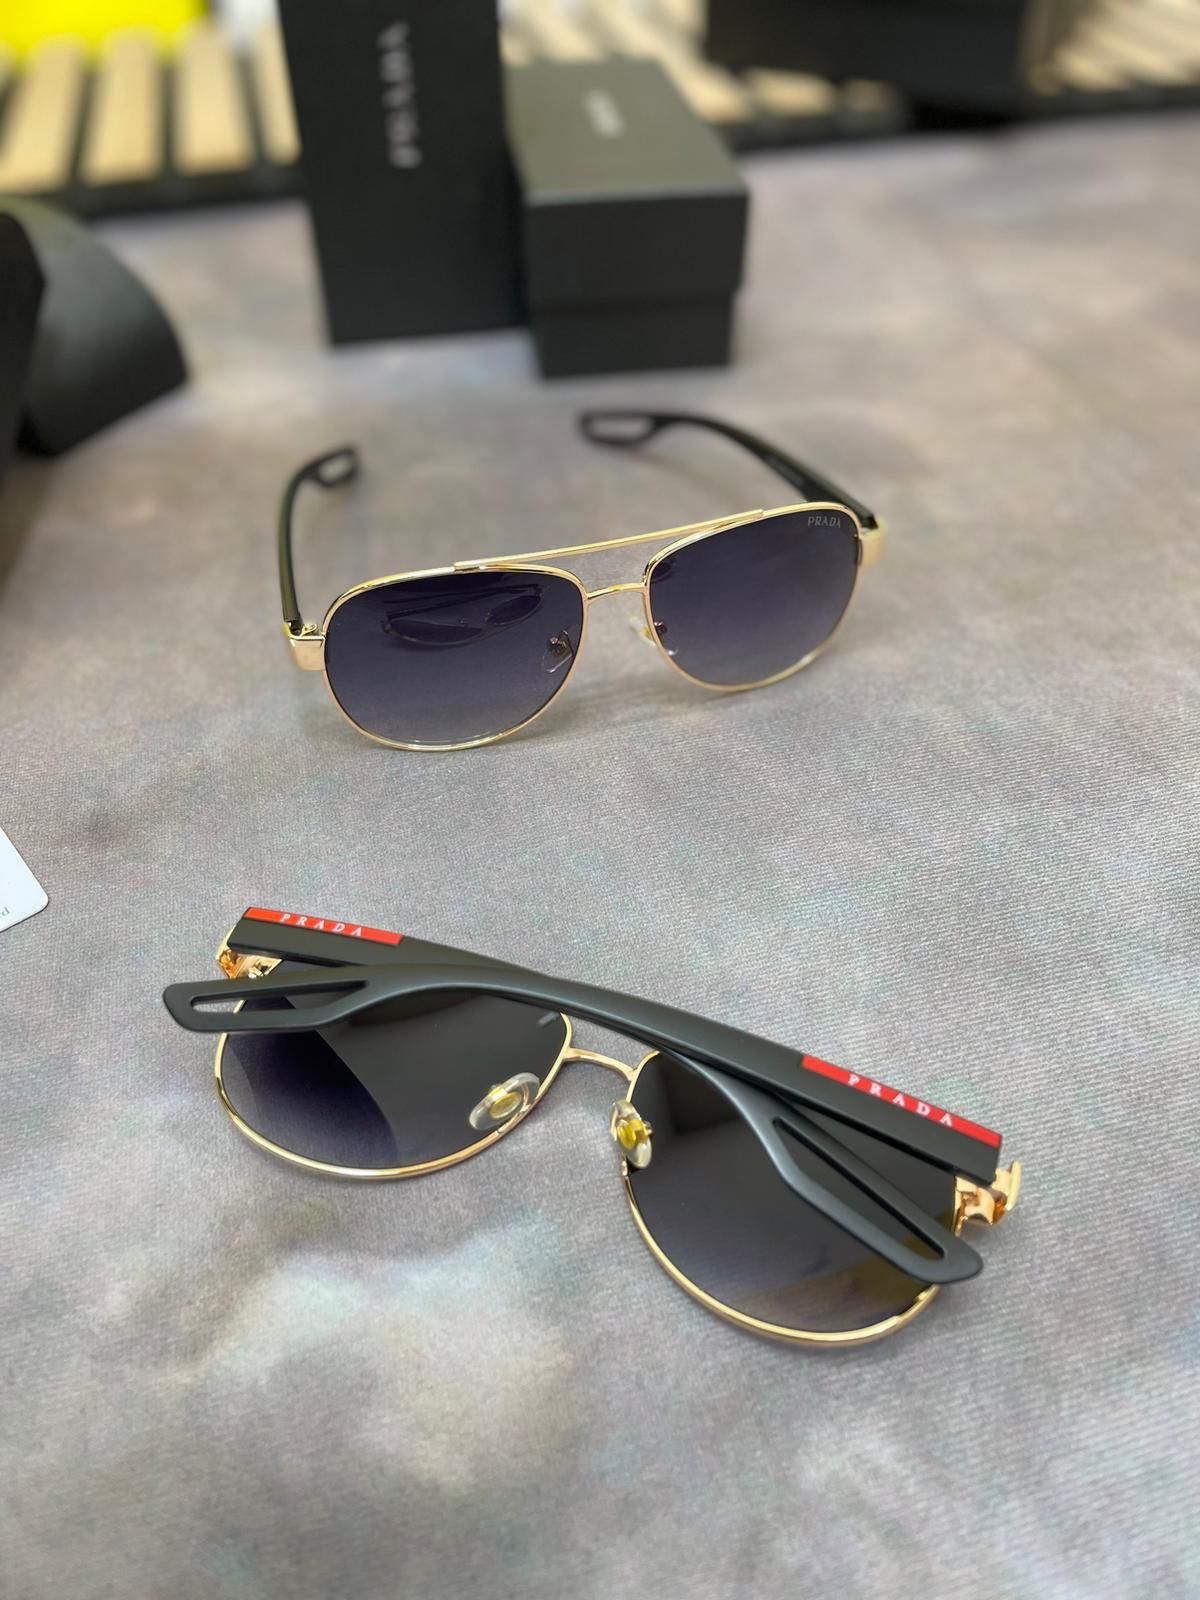 Prda inspired sunglasses